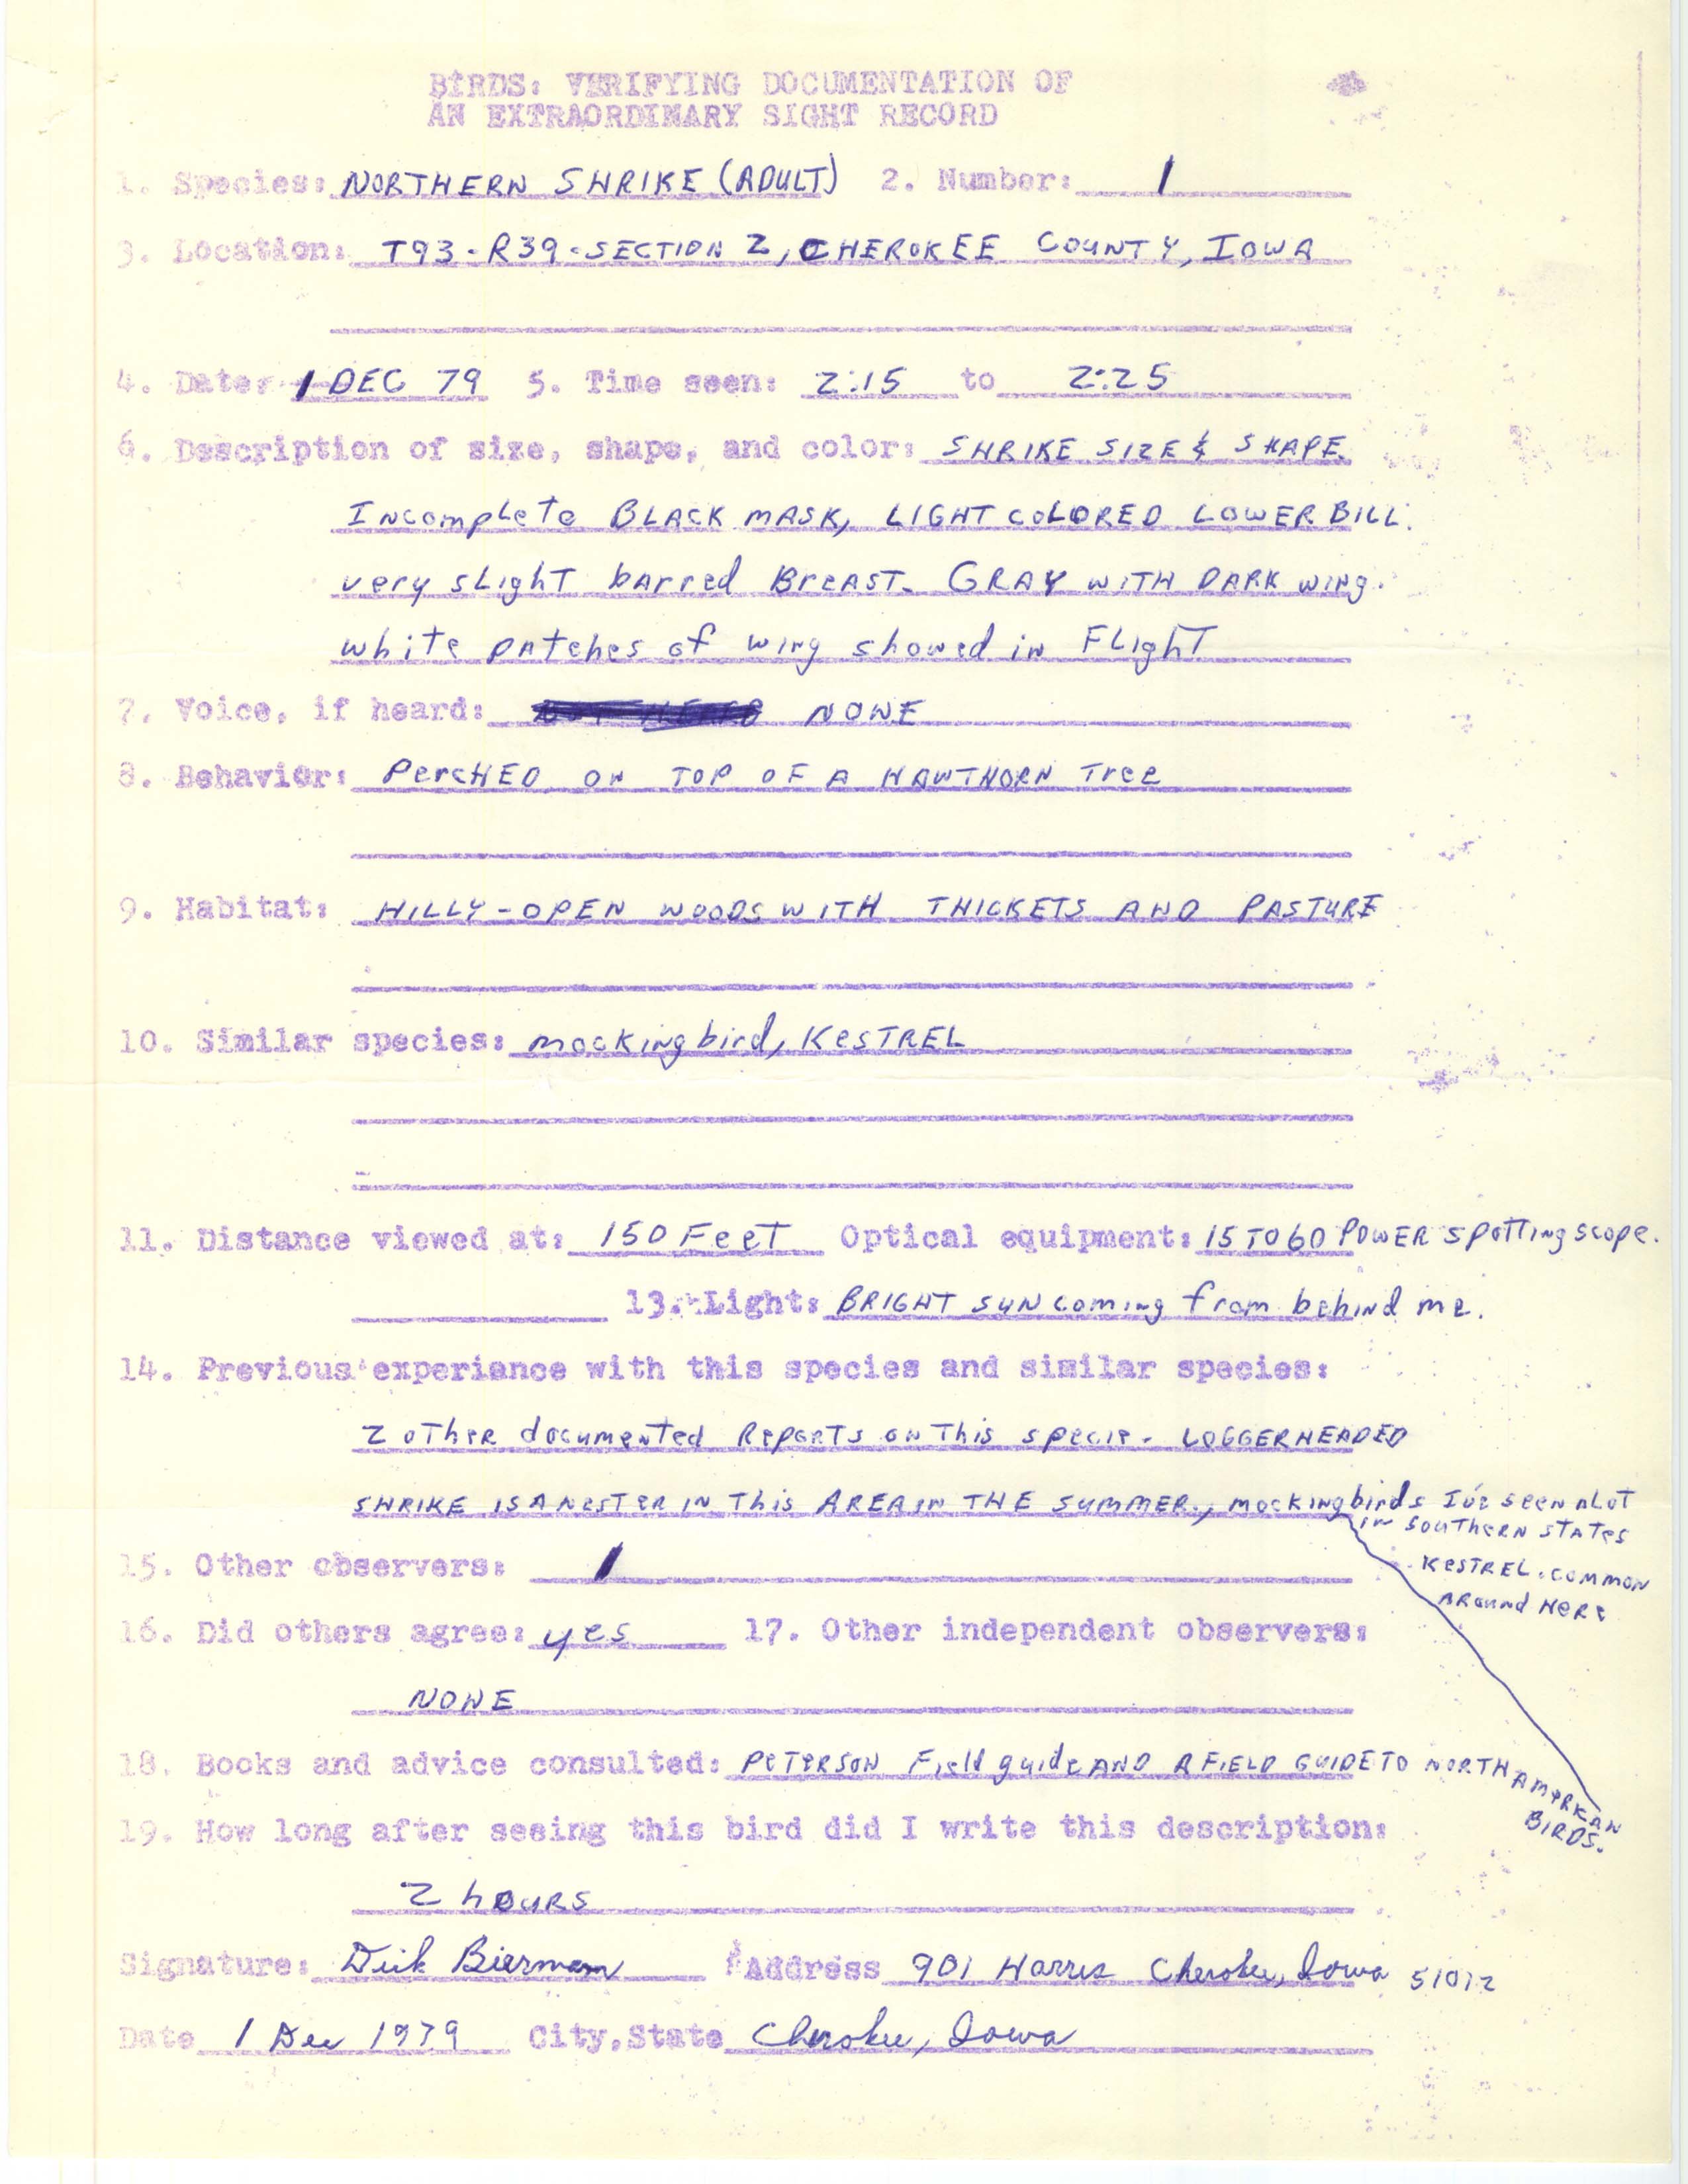 Rare bird documentation form for Northern Shrike near Peterson, 1979